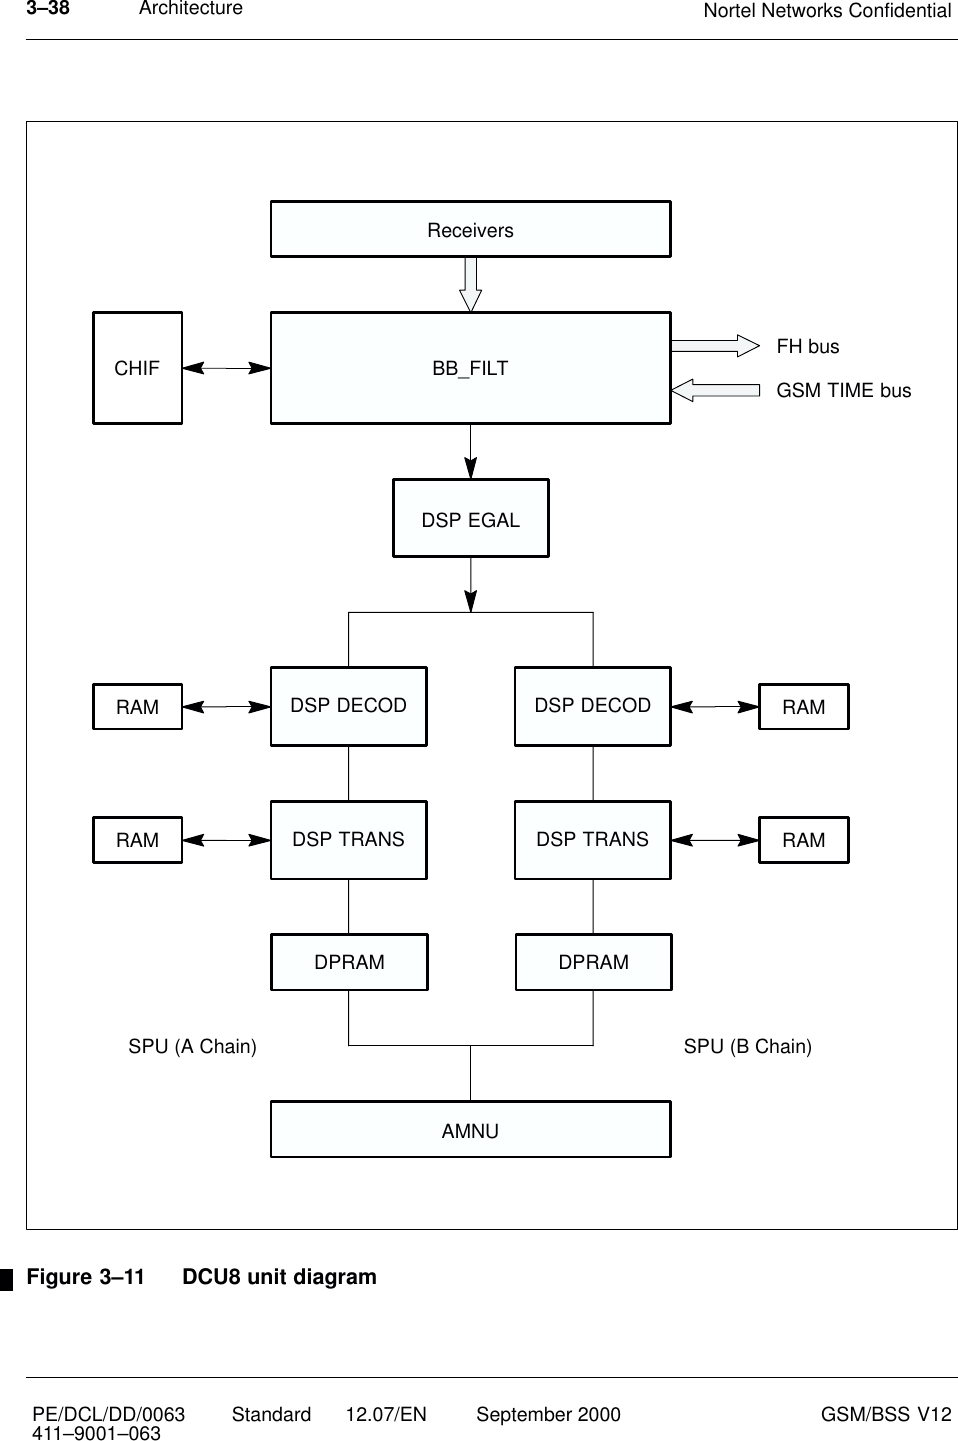 Architecture Nortel Networks Confidential3–38PE/DCL/DD/0063411–9001–063 Standard      12.07/EN September 2000 GSM/BSS V12BB_FILTCHIFRAMAMNUDSP DECOD DSP DECOD RAMDSP TRANS DSP TRANSRAM RAMReceiversFH busGSM TIME busSPU (A Chain) SPU (B Chain)DSP EGALDPRAM DPRAMFigure 3–11 DCU8 unit diagram